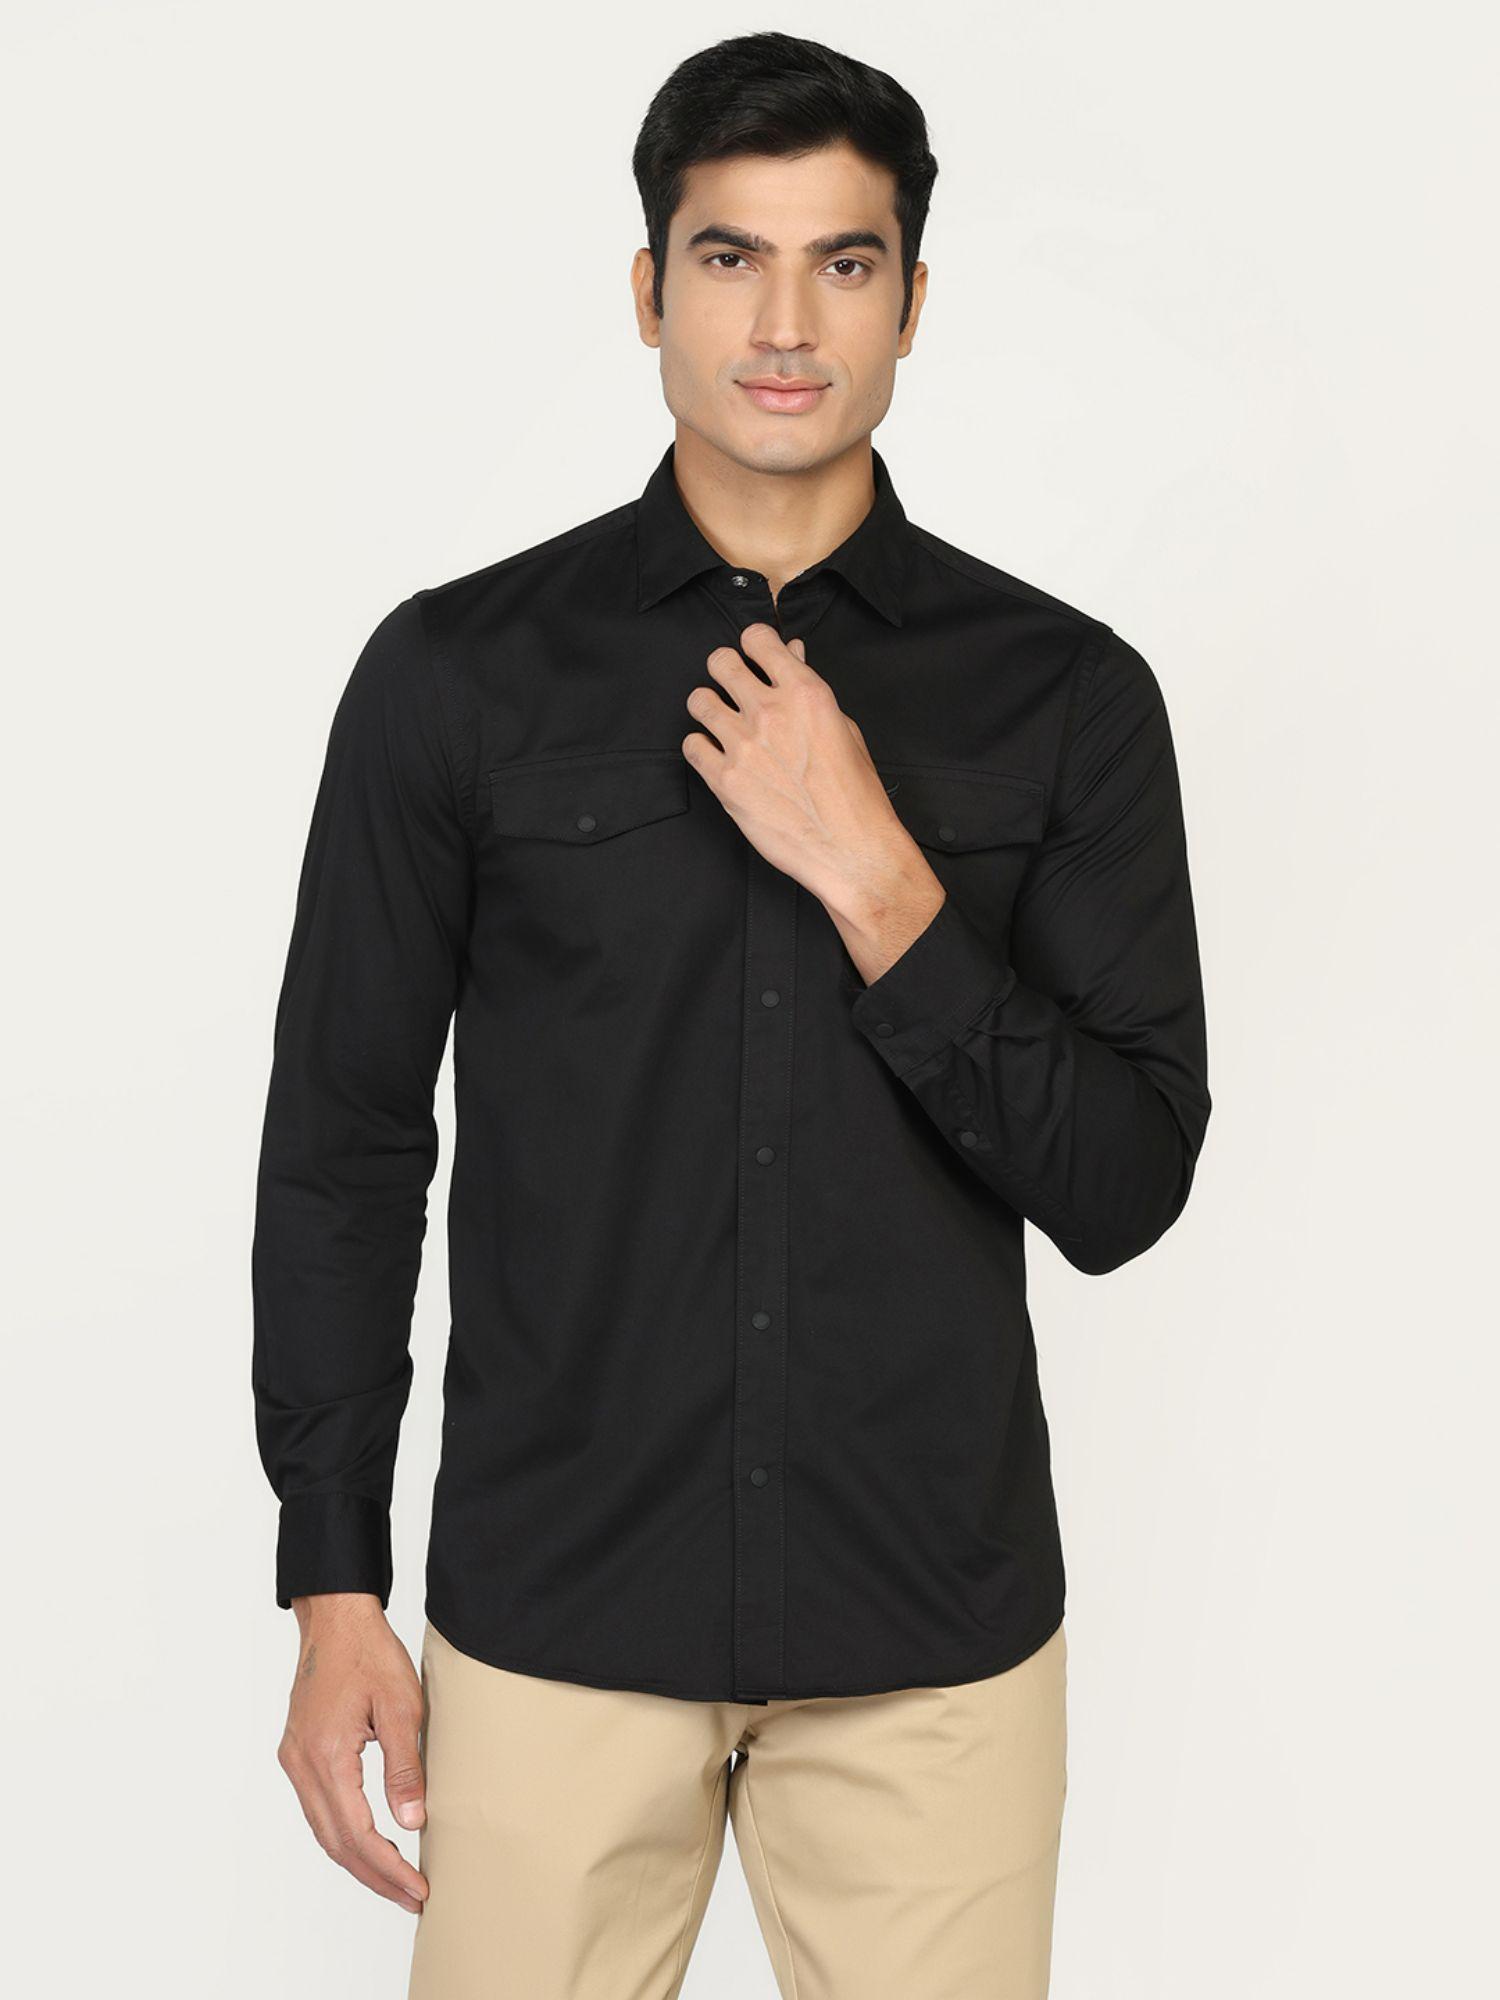 mens-solid-black-cuff-sleeve-shirt